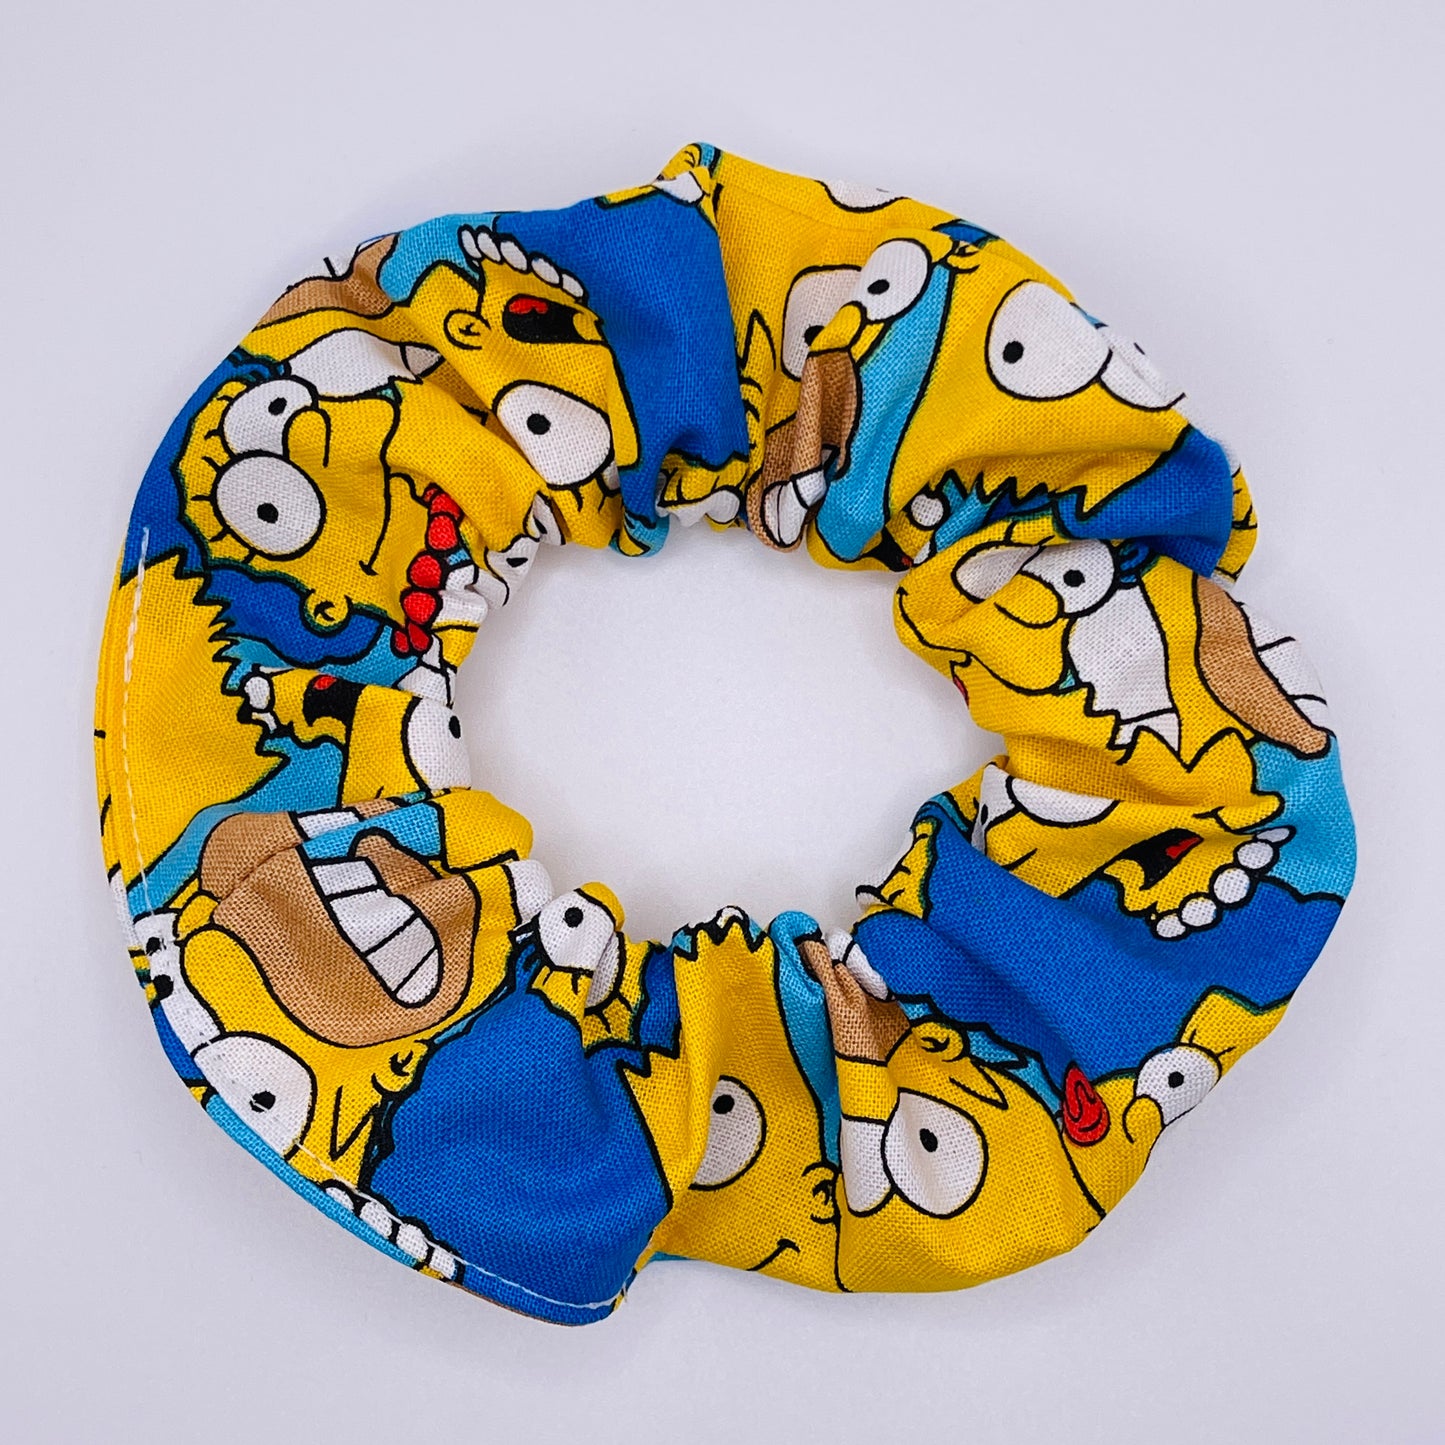 The Simpsons on Stripes Bandana